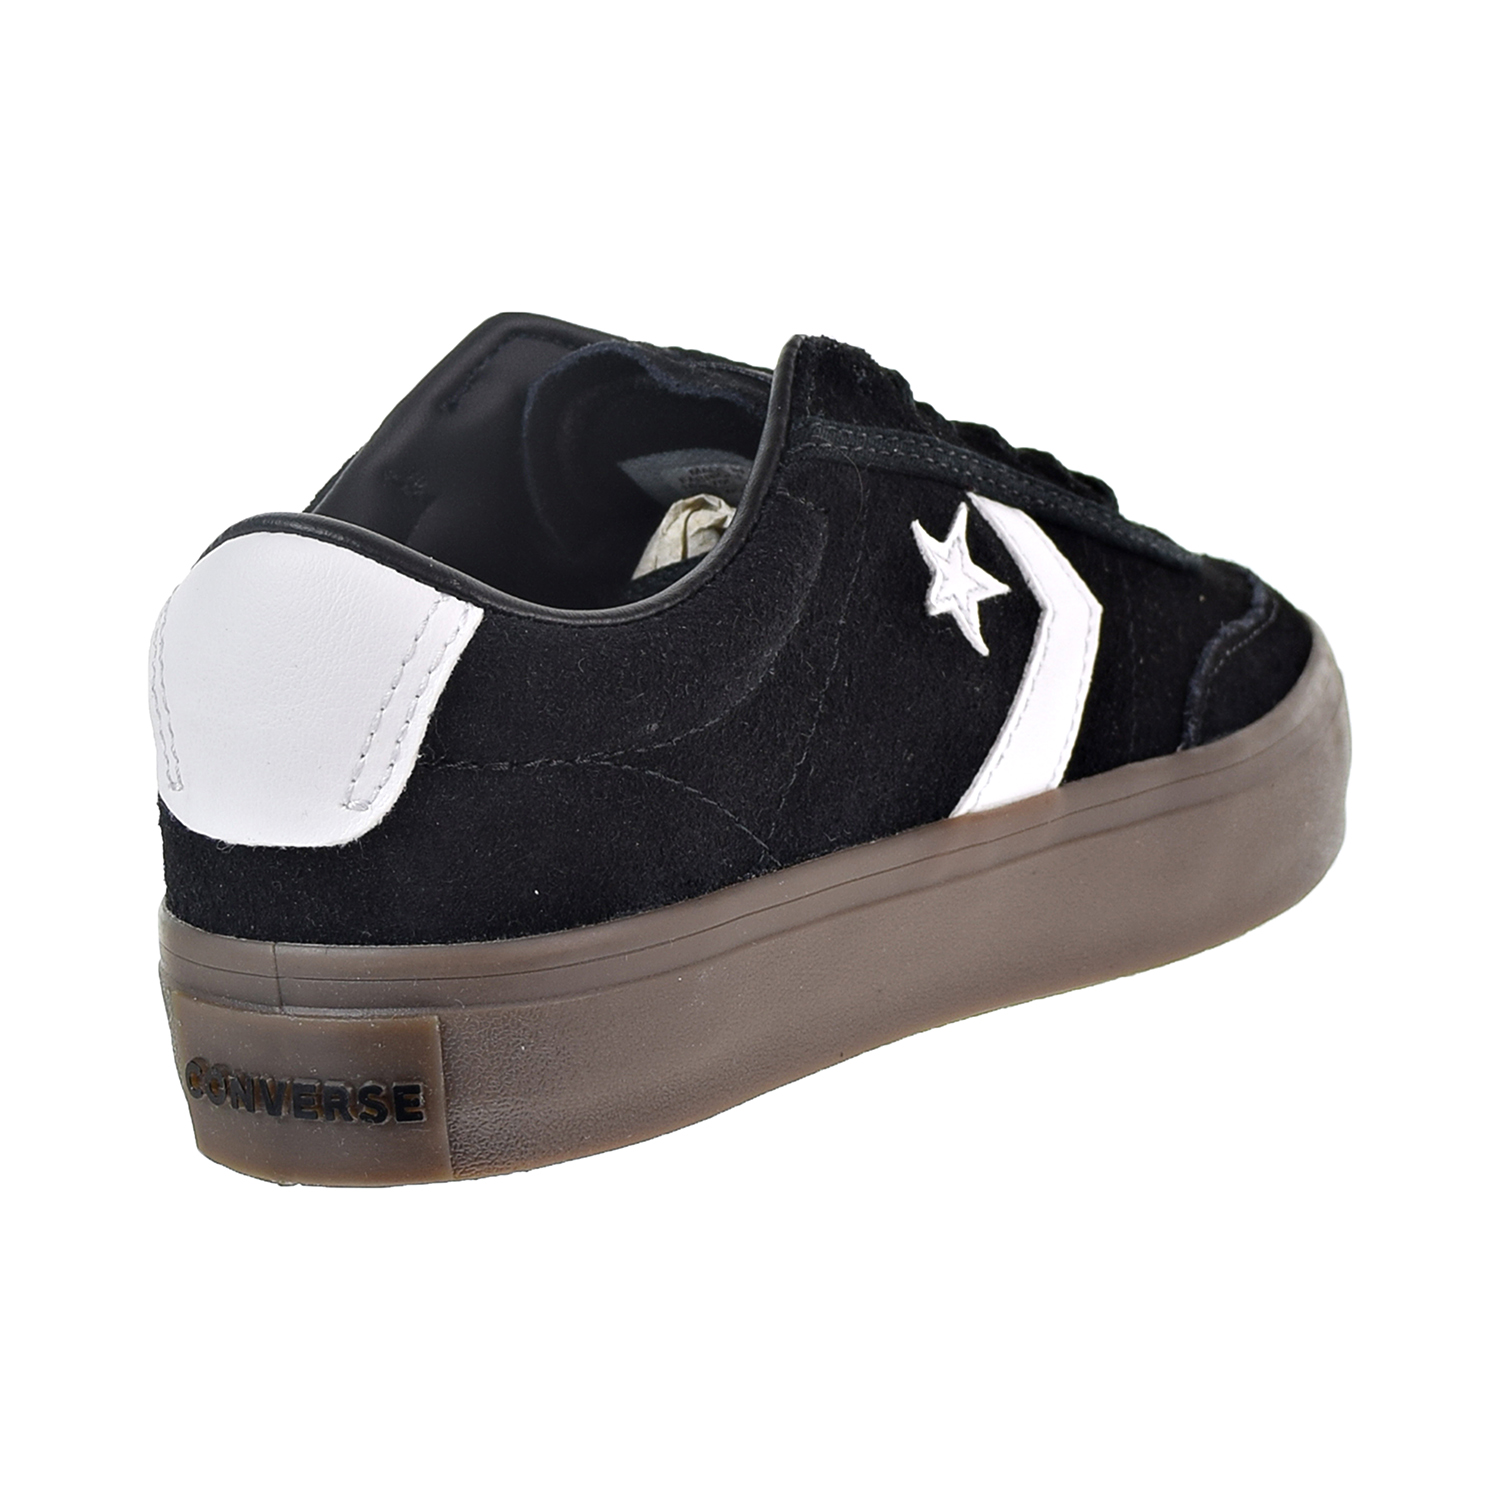 Converse Courtlandt OX Big Kids'/Men's Shoes Black-White-Brown 162570c - image 3 of 6